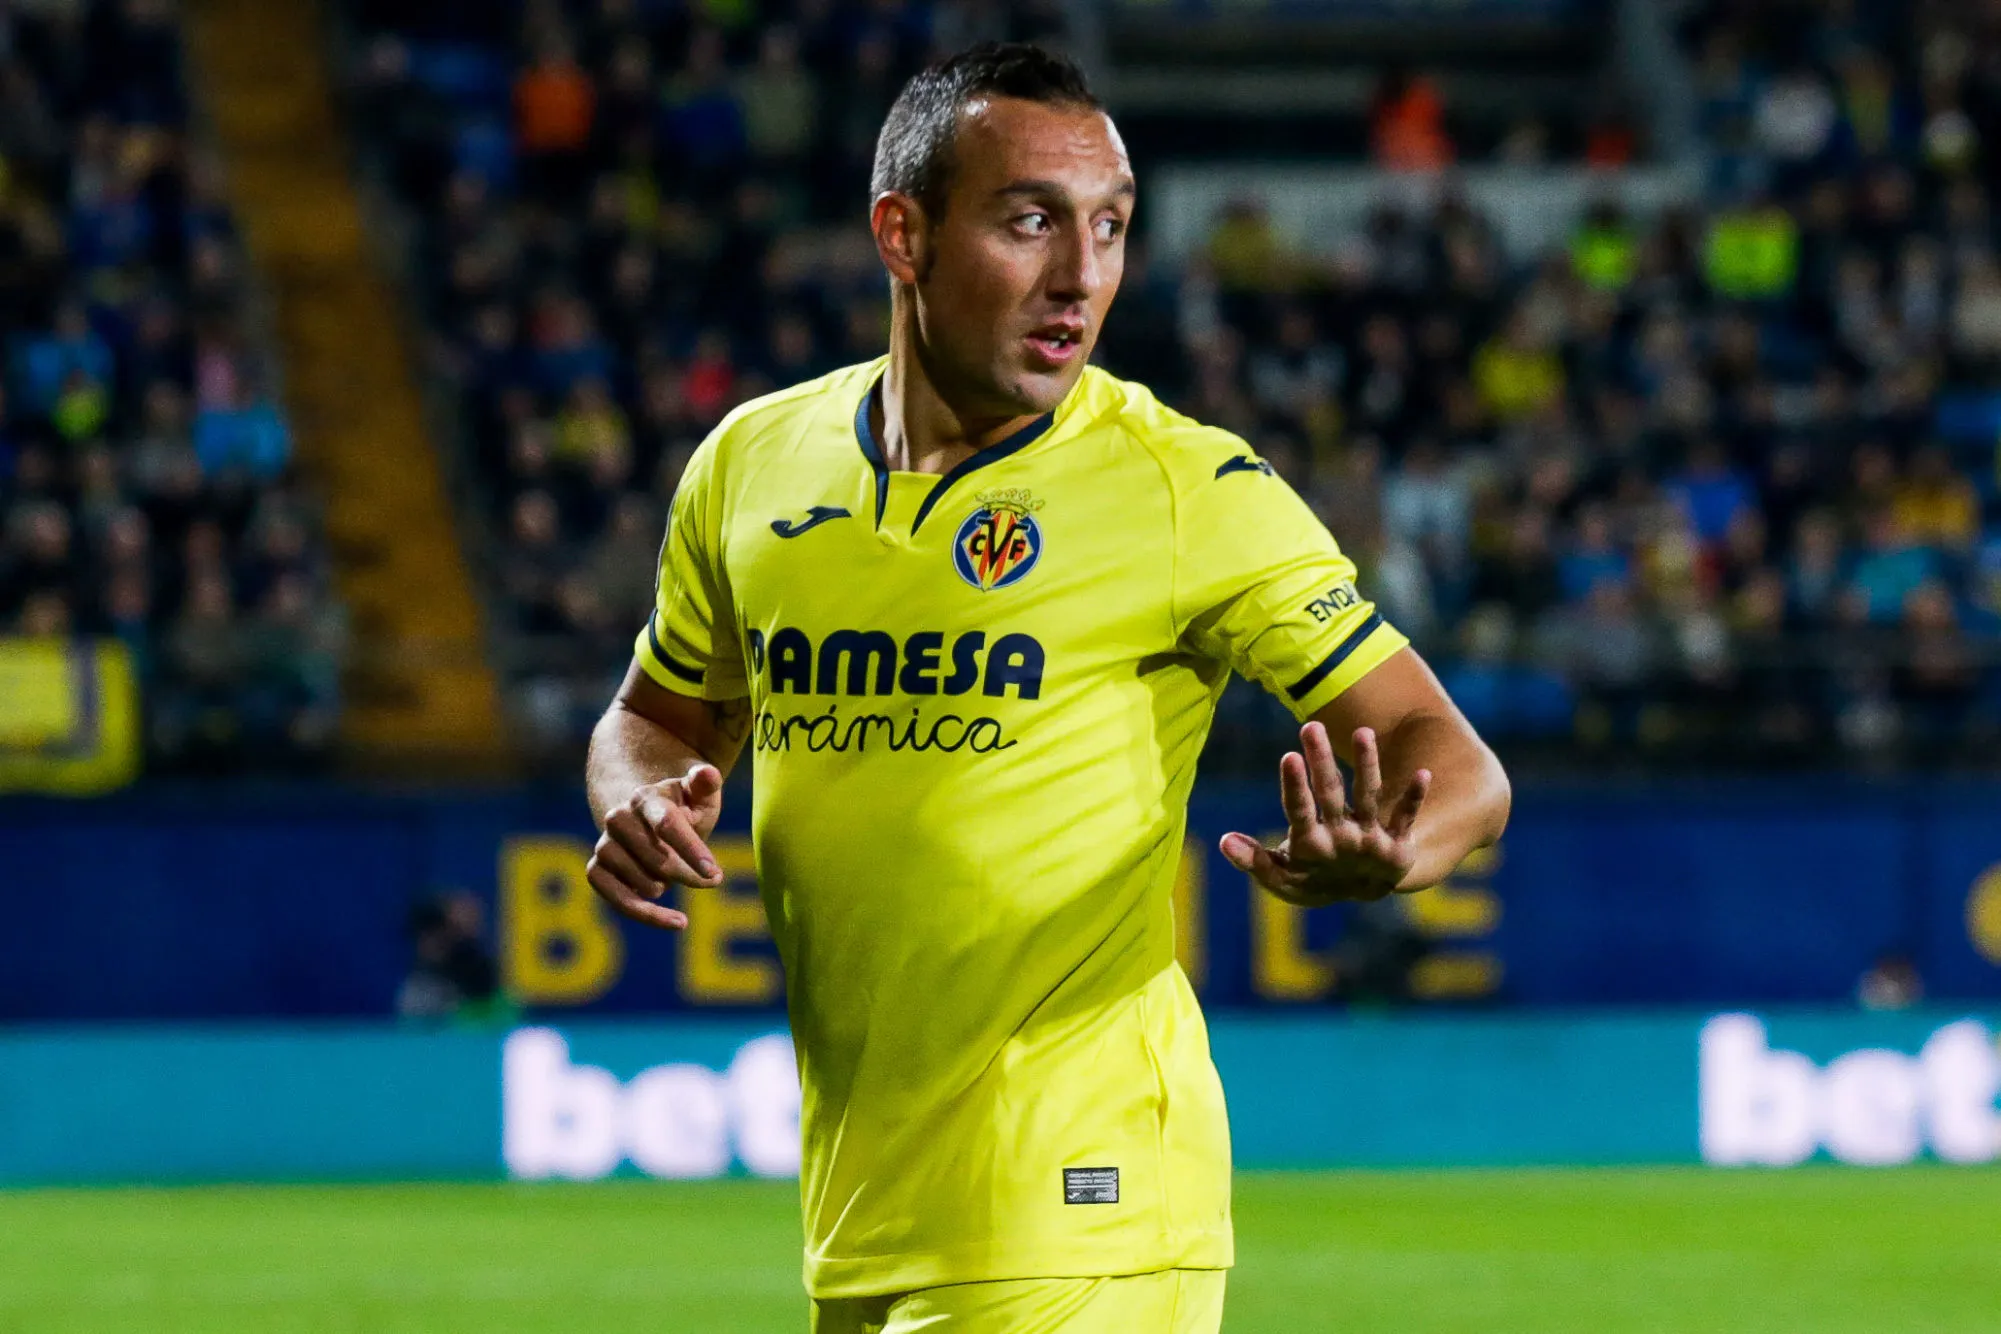 Pronostic Villarreal Valence : Analyse, prono et cotes du match de Liga